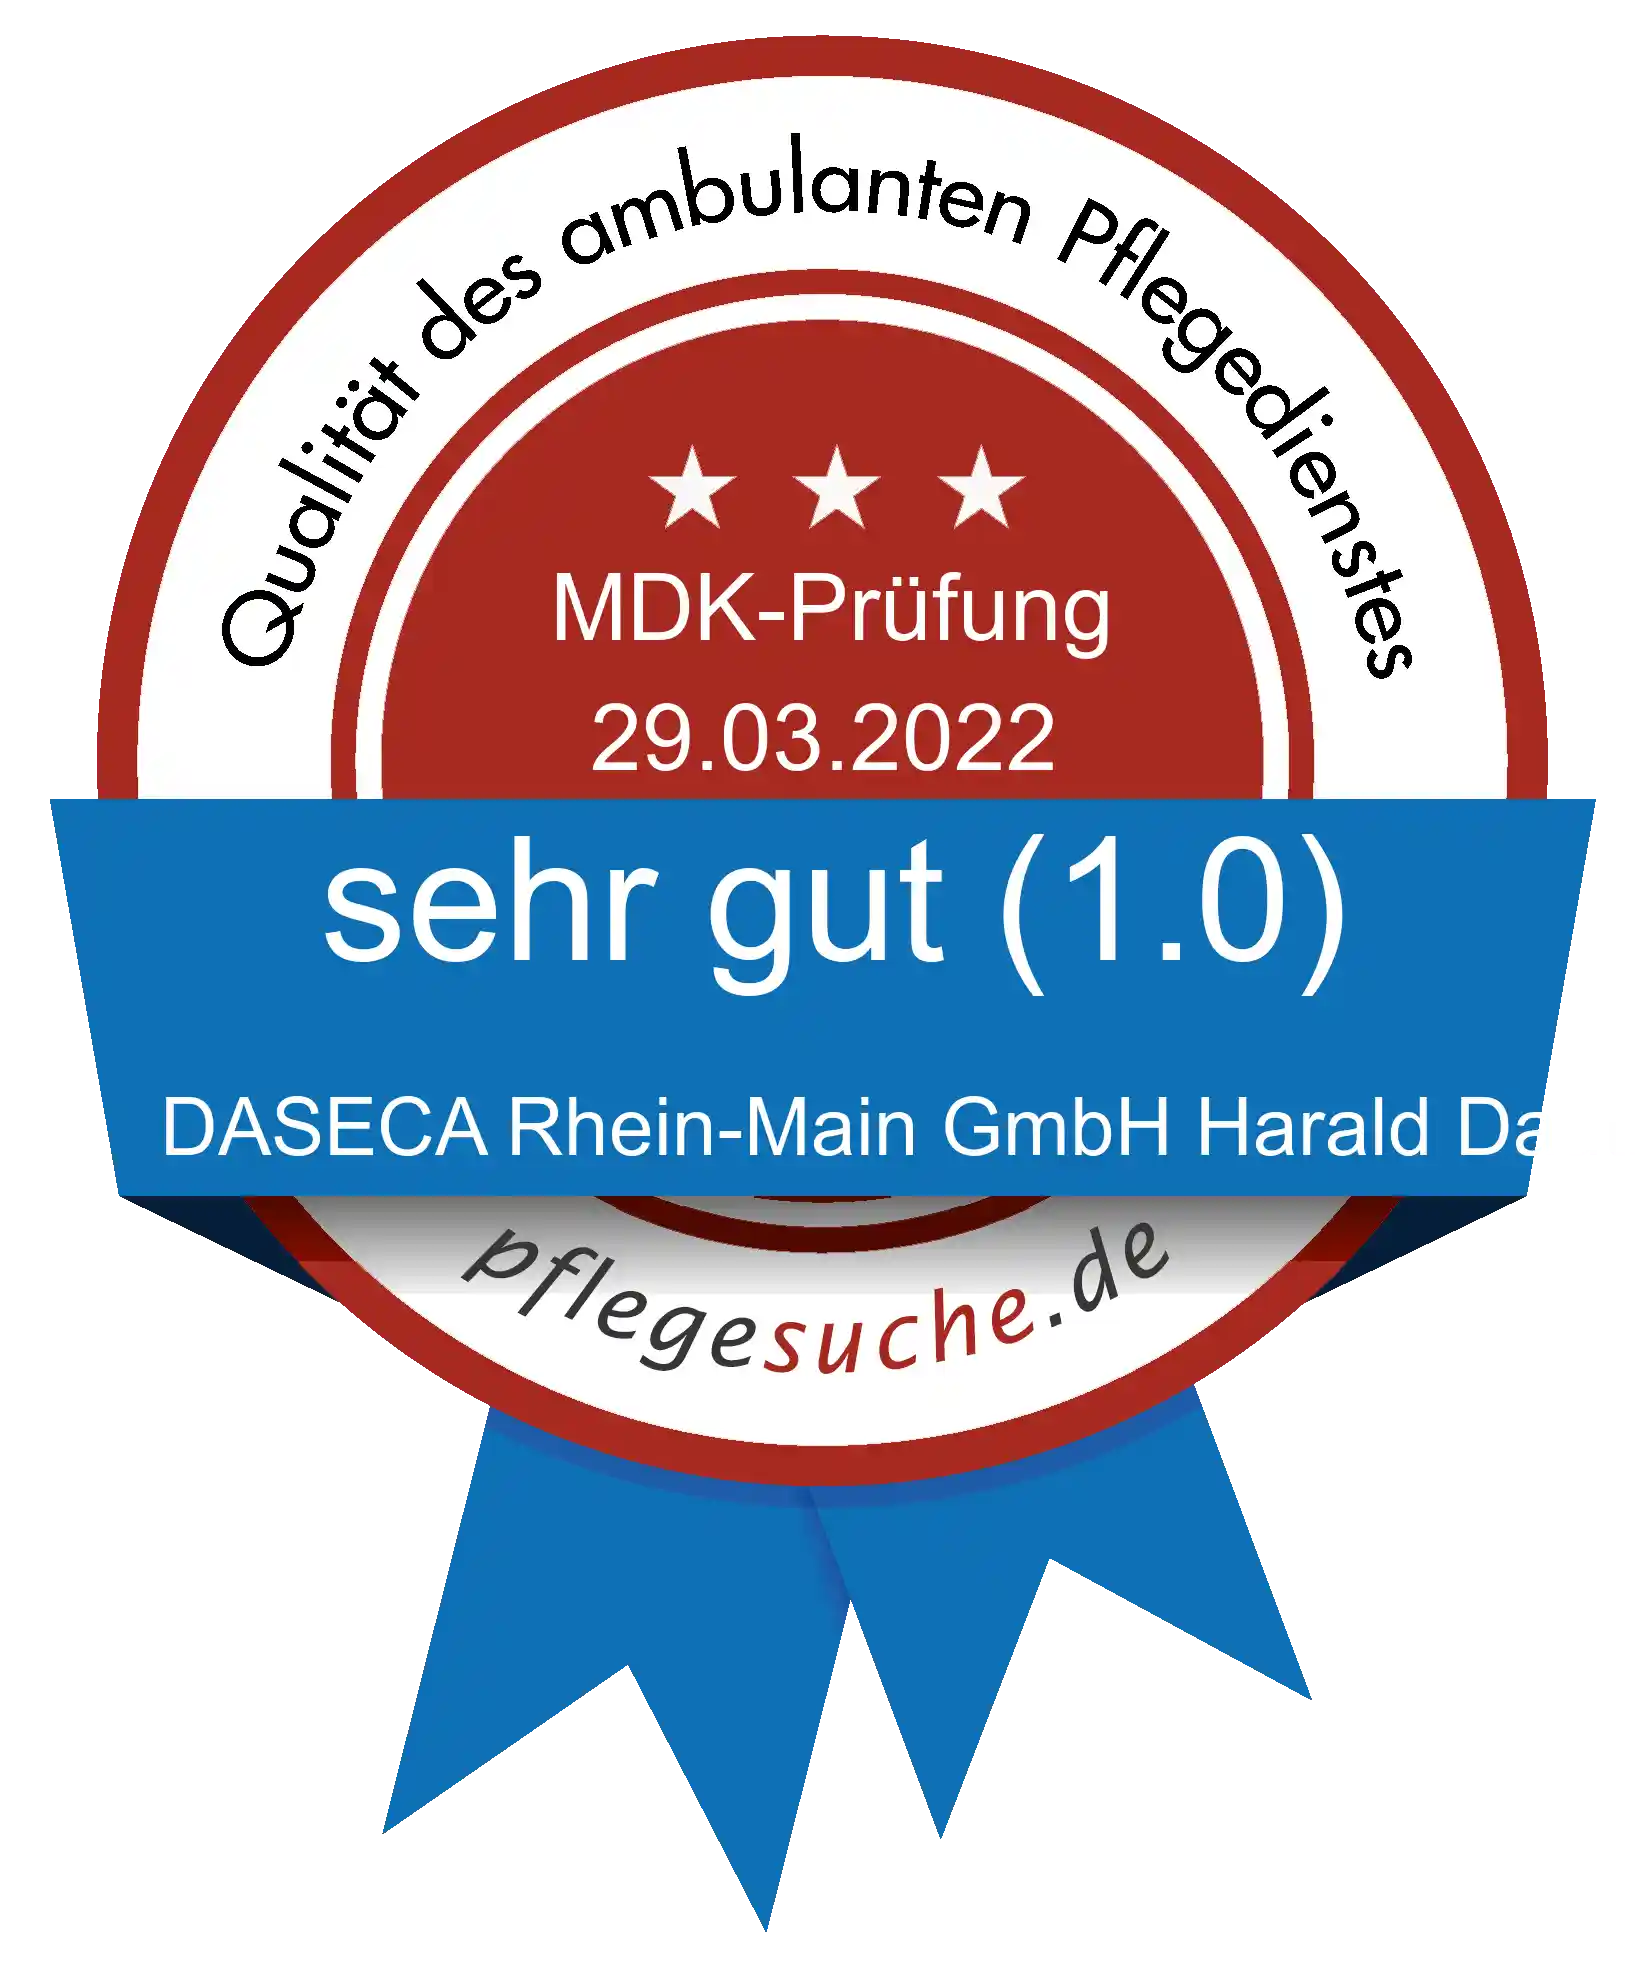 Siegel Benotung: DASECA Rhein-Main GmbH Harald Dauth